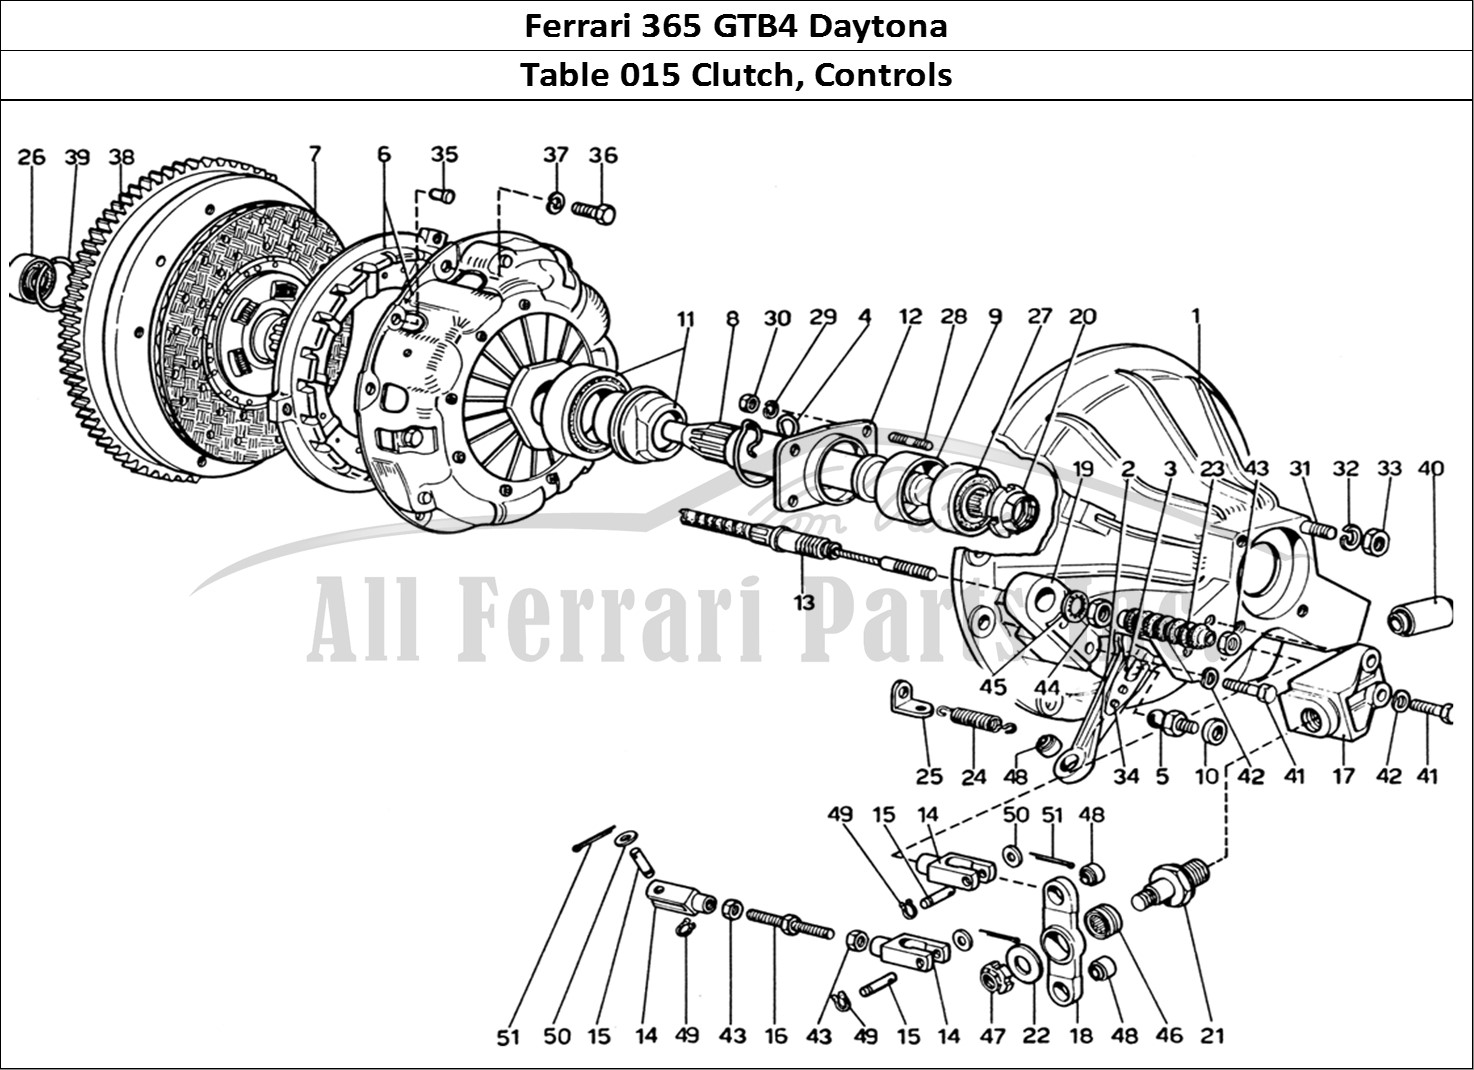 Ferrari Parts Ferrari 365 GTB4 Daytona (1969) Page 015 Clutch & Controls